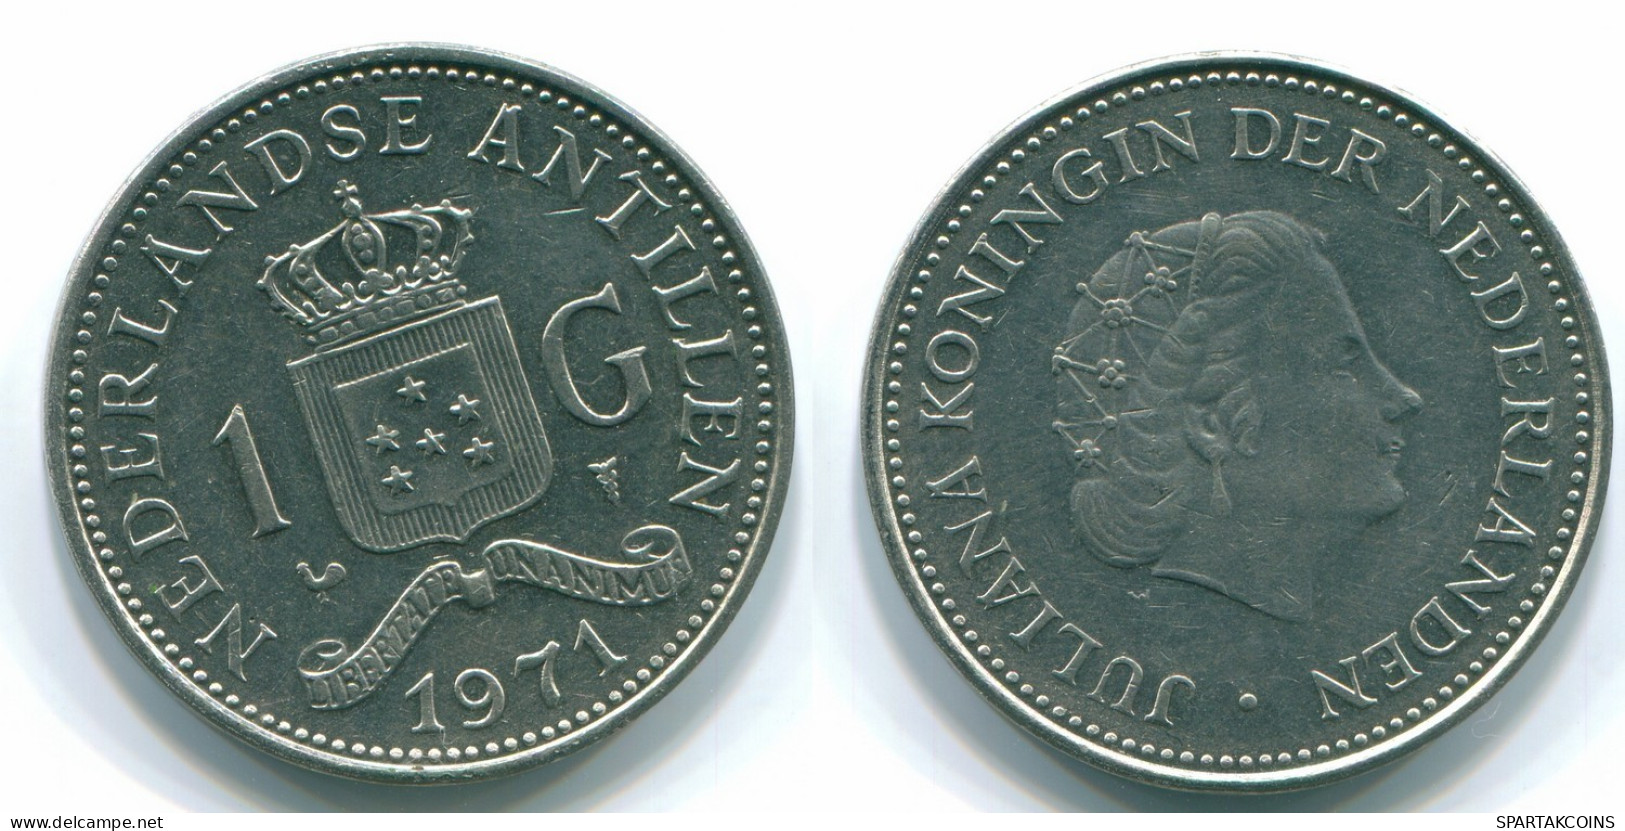 1 GULDEN 1971 NETHERLANDS ANTILLES Nickel Colonial Coin #S11996.U.A - Netherlands Antilles